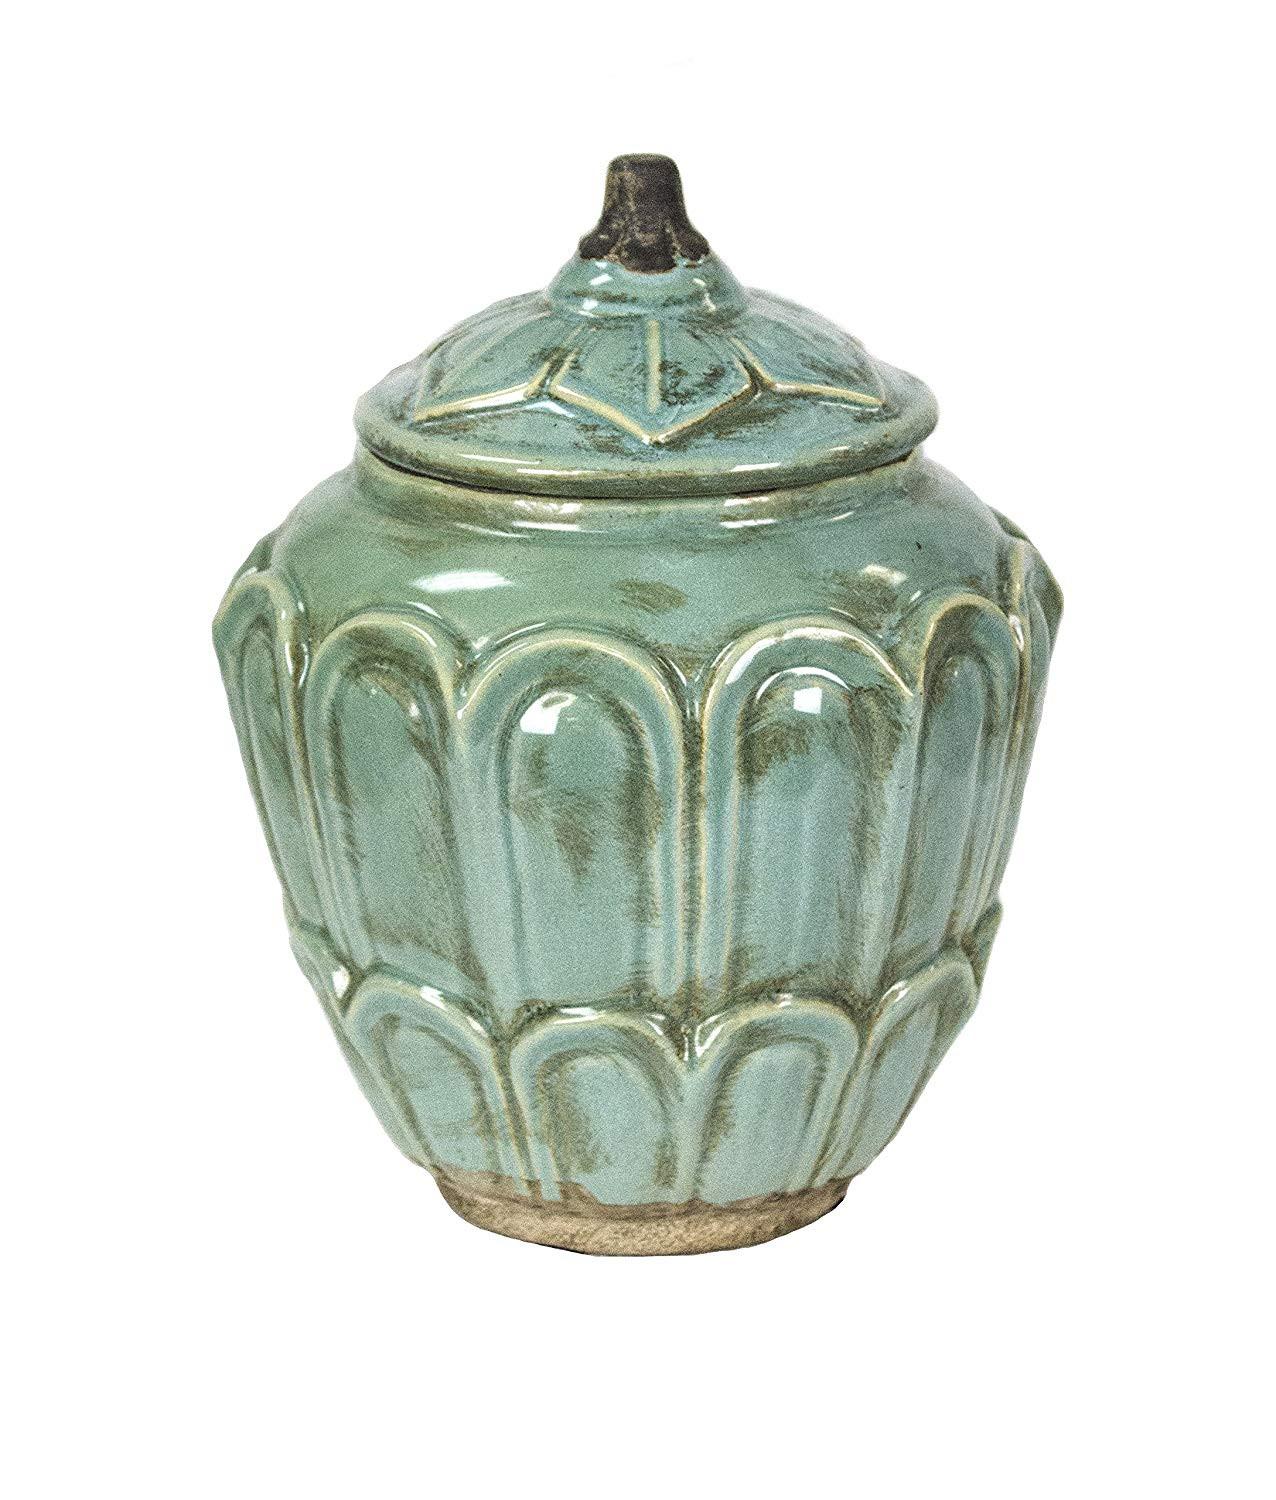 gold urn vase of amazon com sagebrook home 11477 decorative ceramic covered jar in amazon com sagebrook home 11477 decorative ceramic covered jar antique blue terracotta 6 5 x 6 5 x 8 5 inches home kitchen